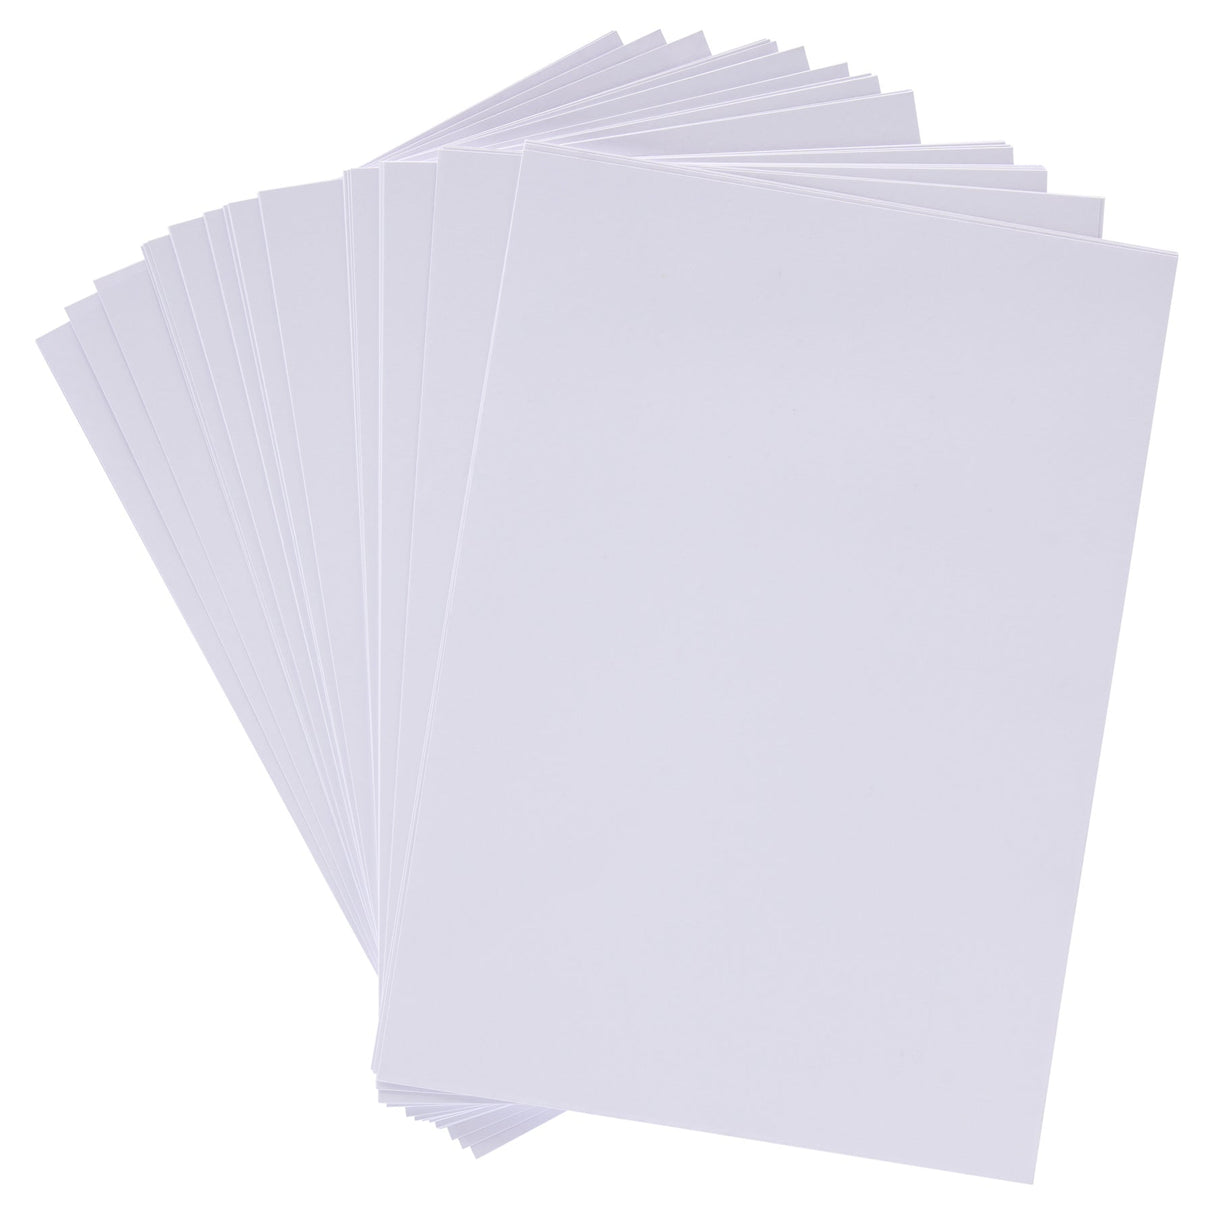 Premier Activity A4 Card - 160 gsm - White - 50 Sheets-Craft Paper & Card-Premier|StationeryShop.co.uk